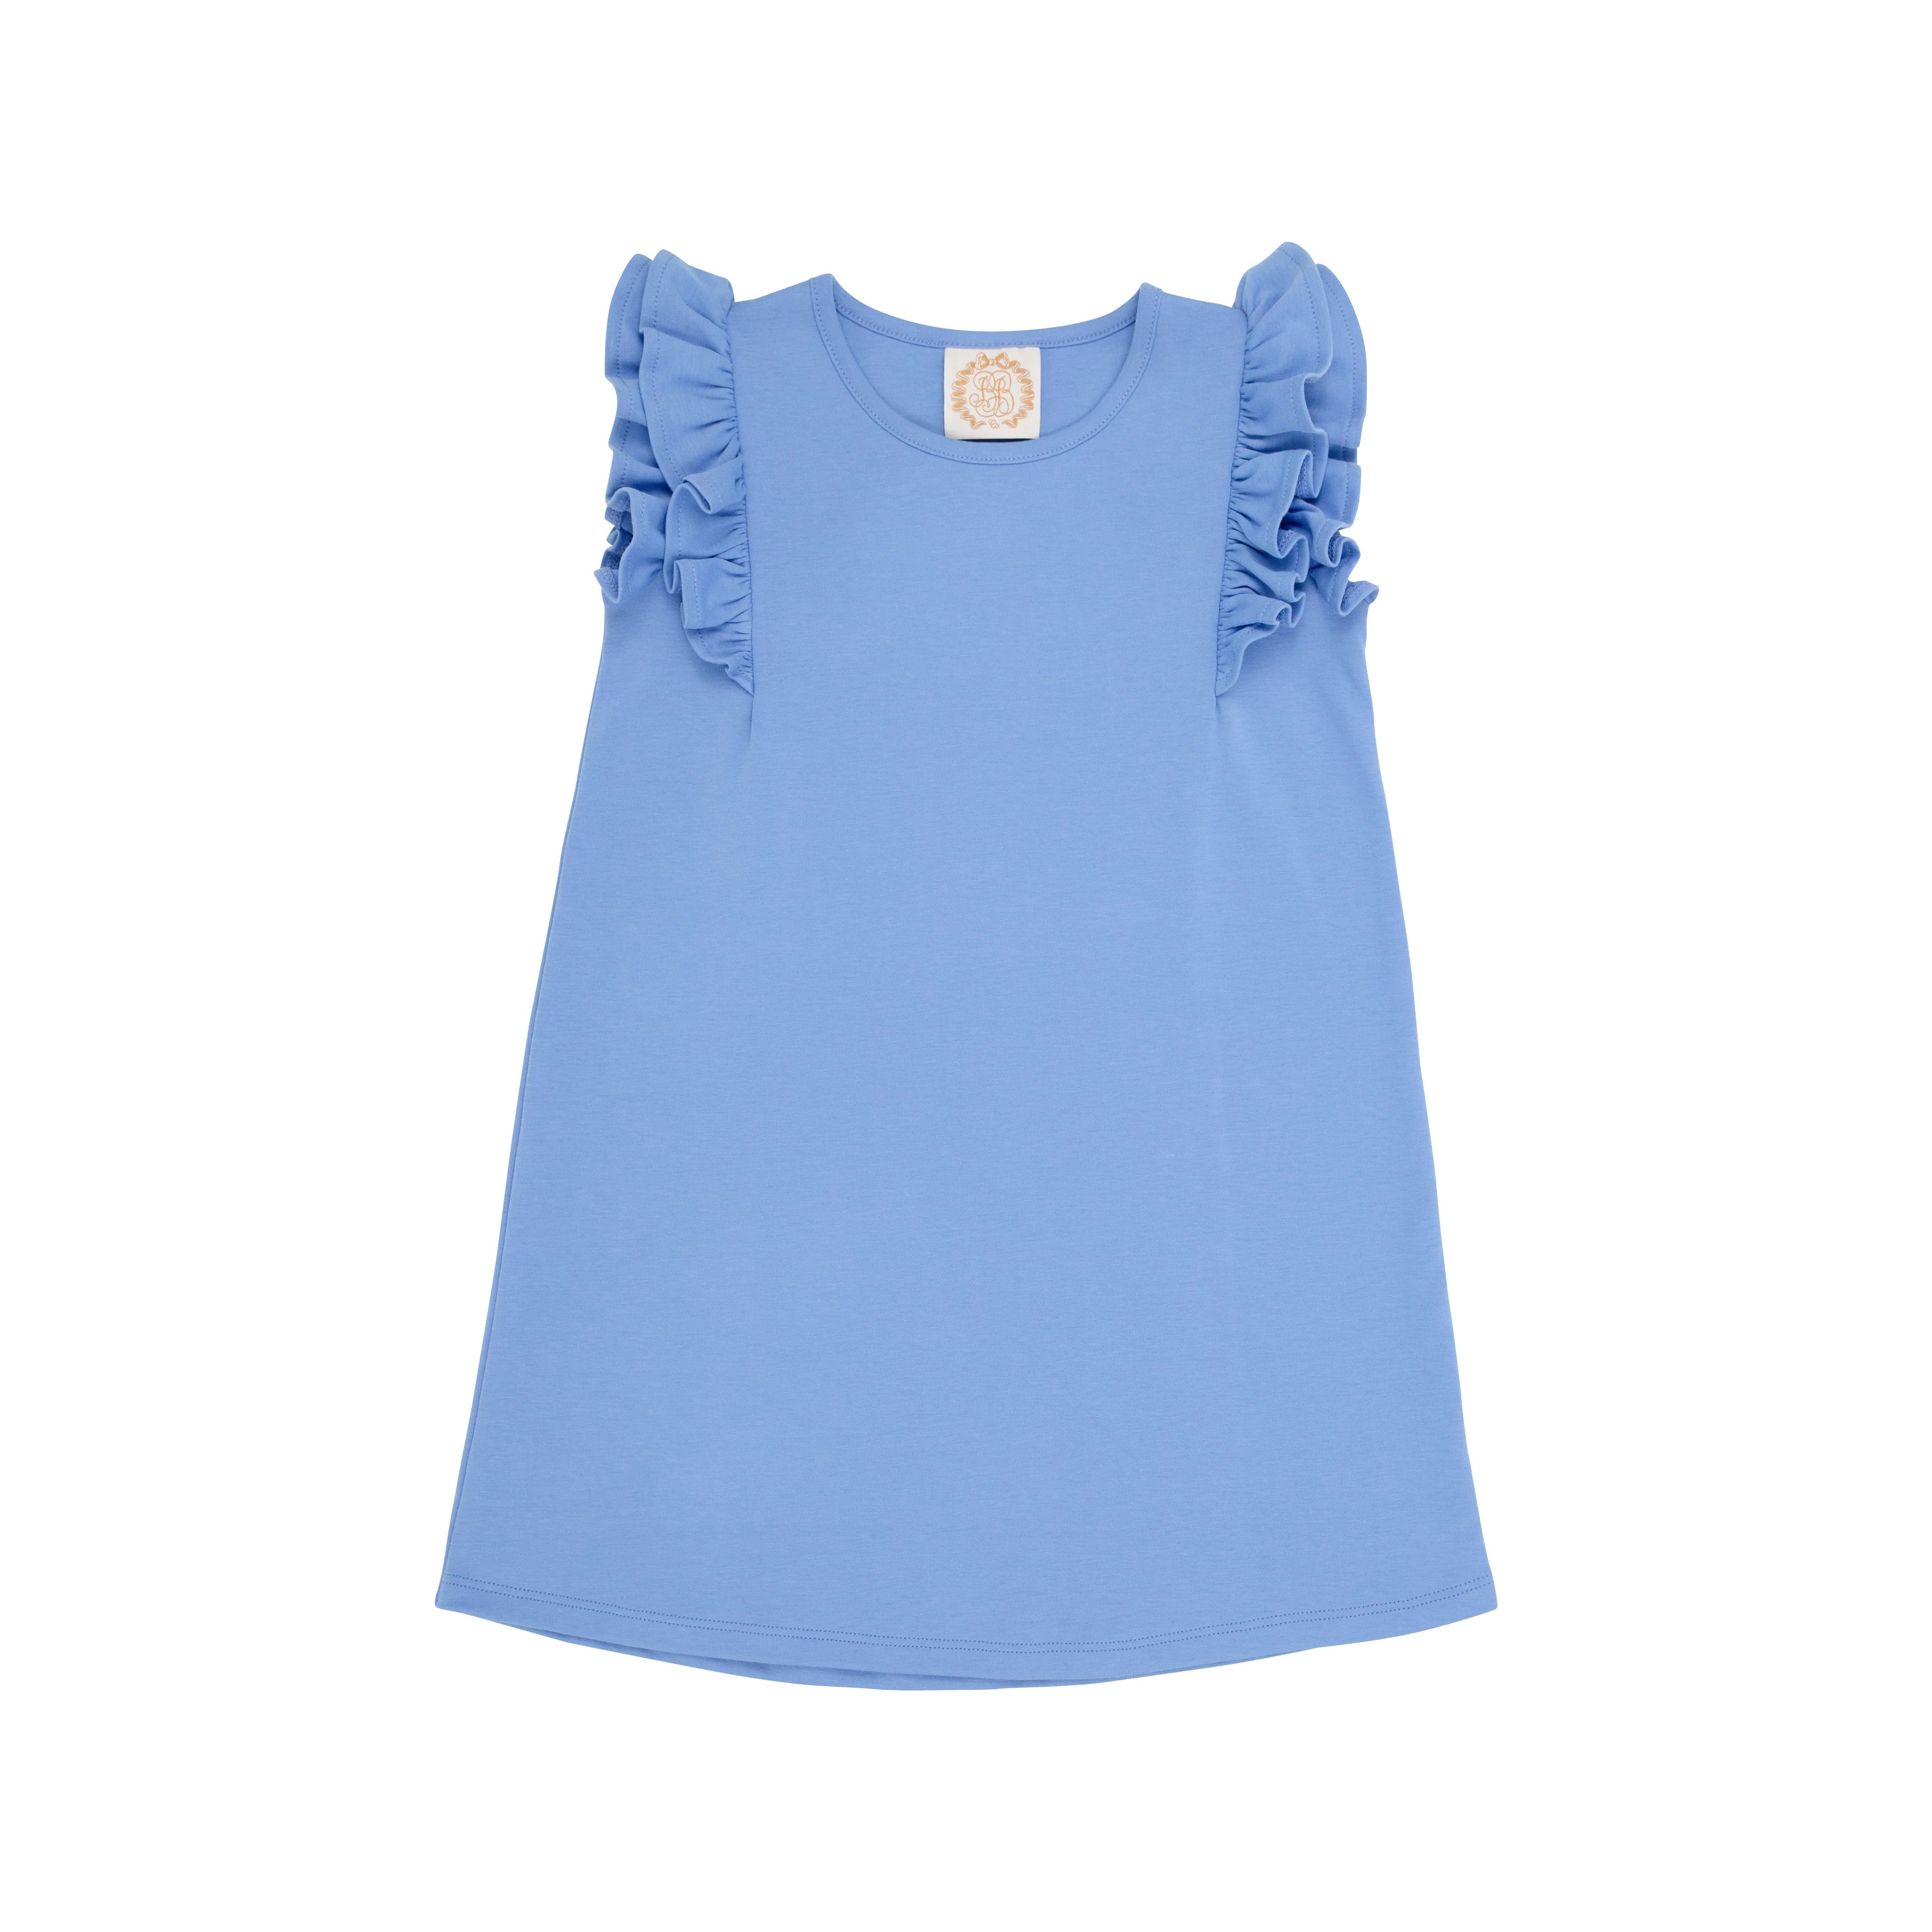 Ruehling Ruffle Dress - Barbados Blue | The Beaufort Bonnet Company